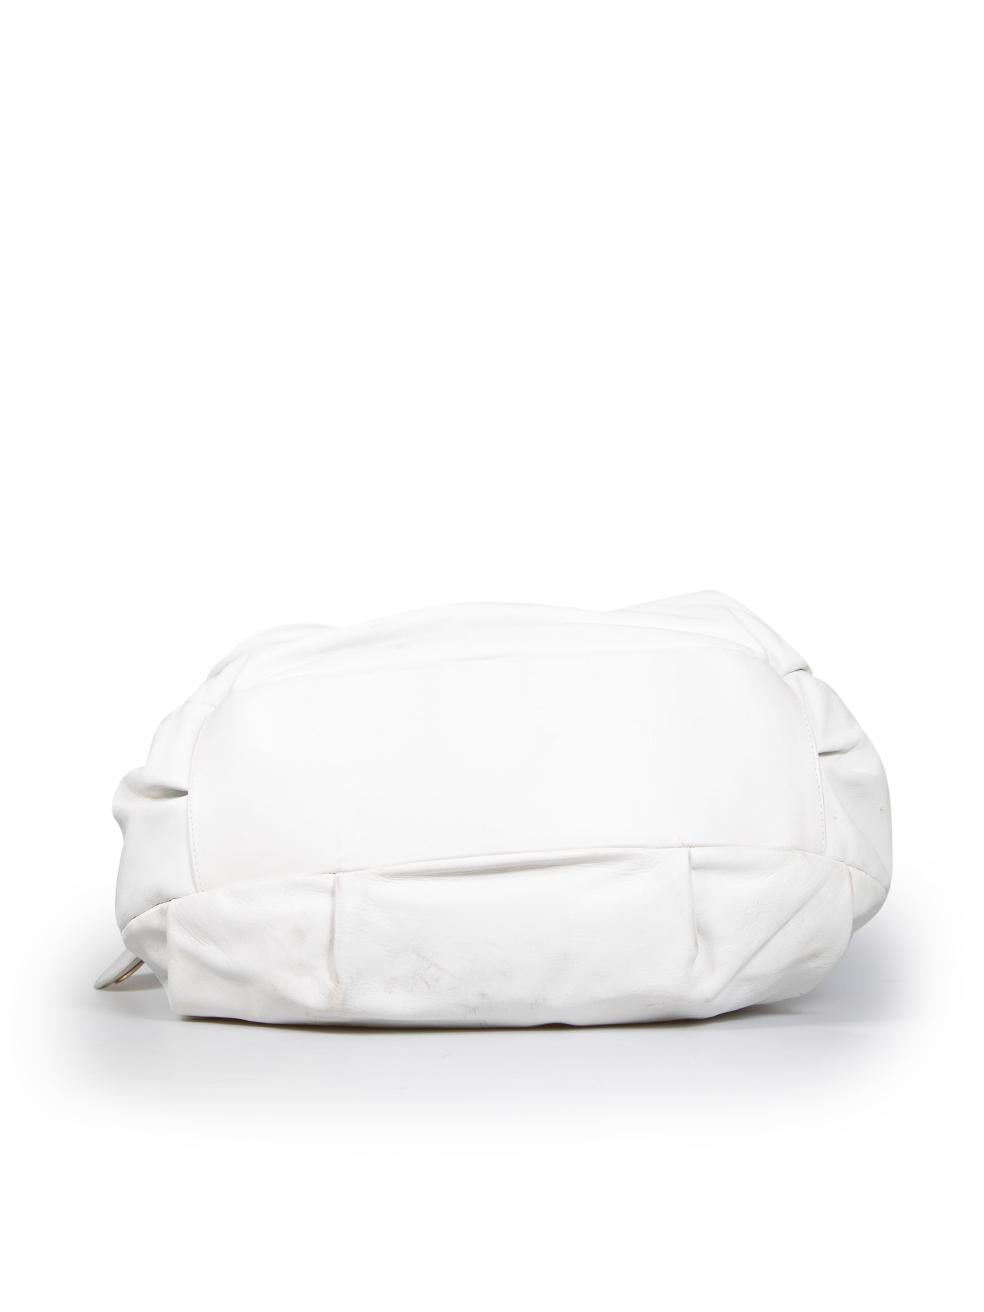 Women's Vivienne Westwood White Leather Shoulder Bag For Sale